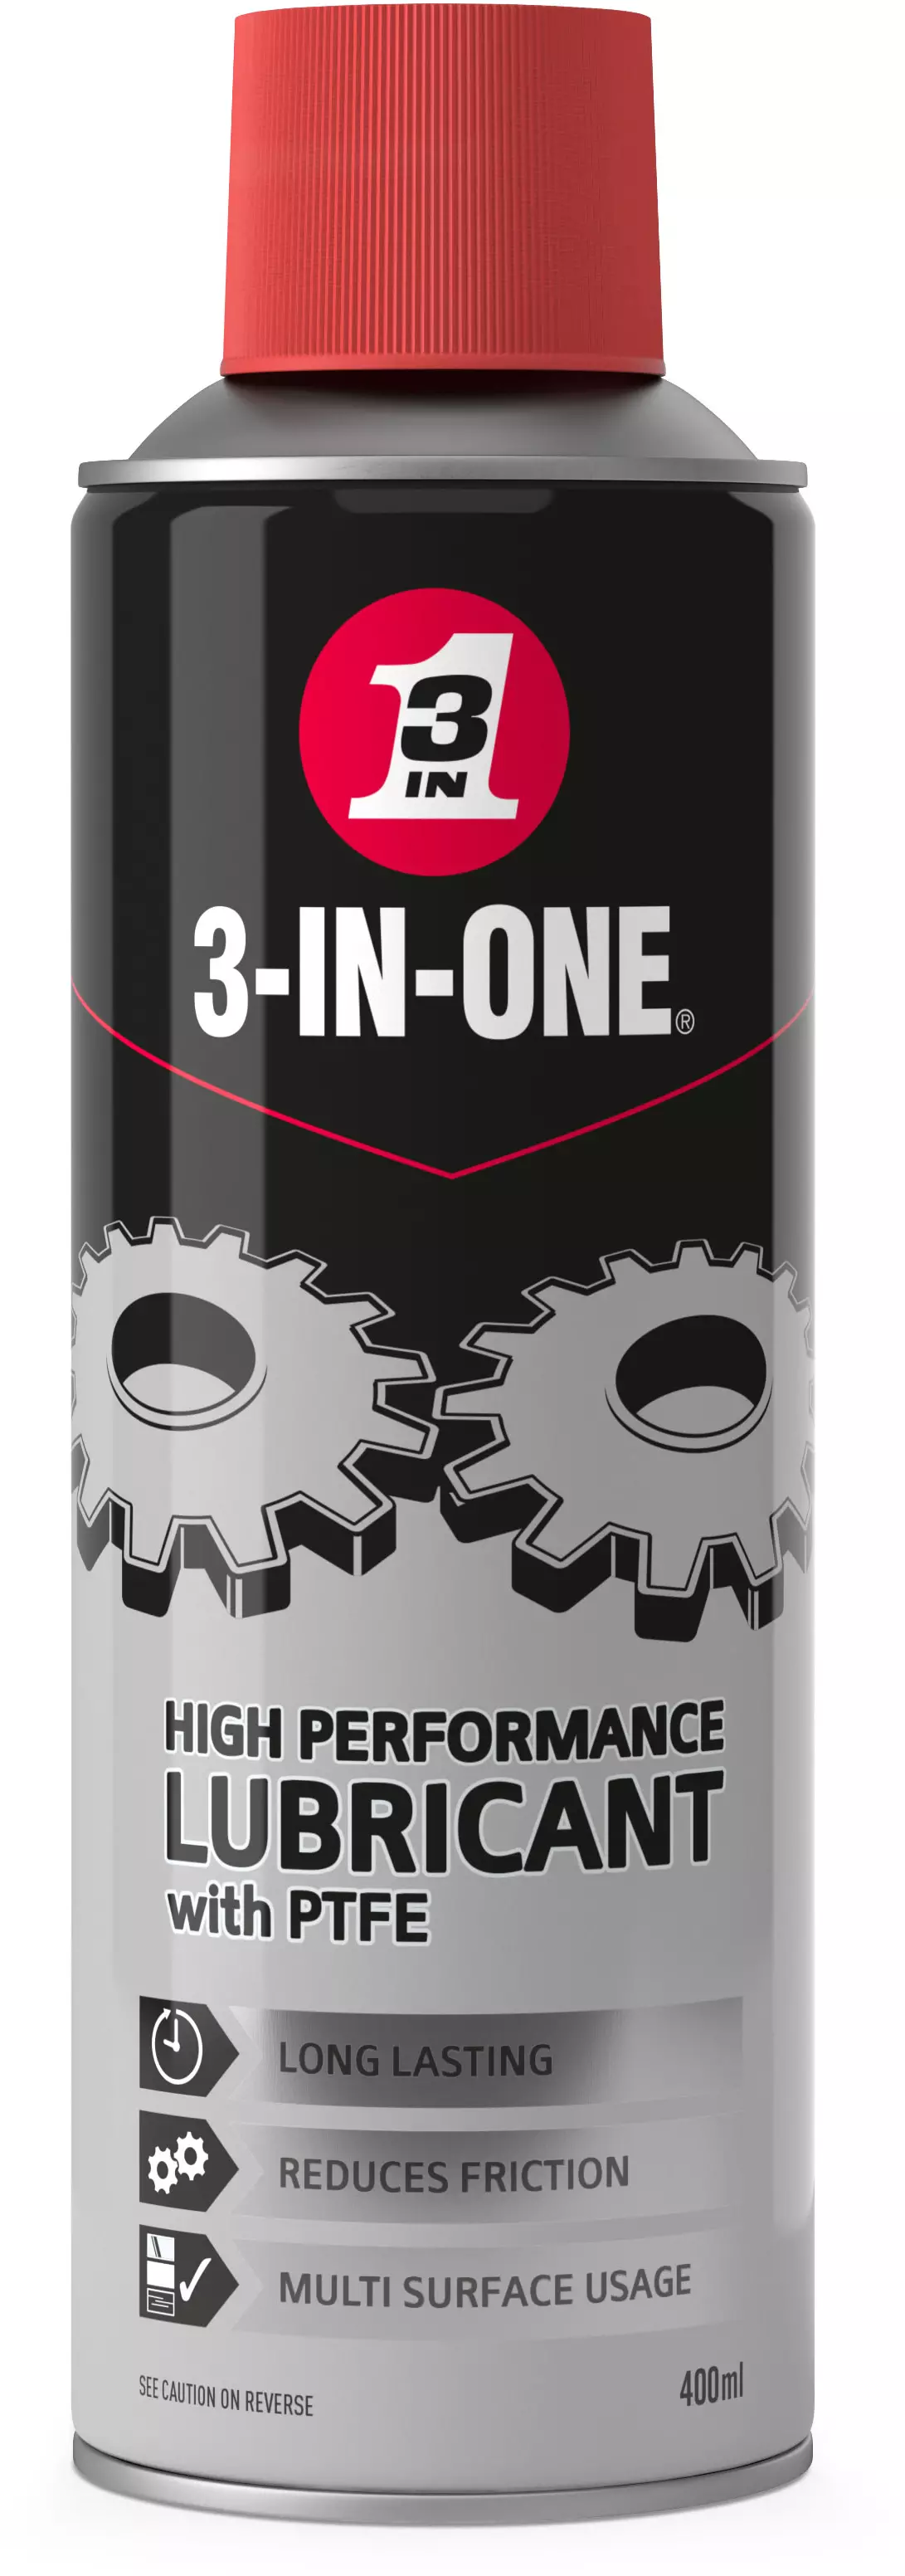 3 in 1 bike maintenance spray